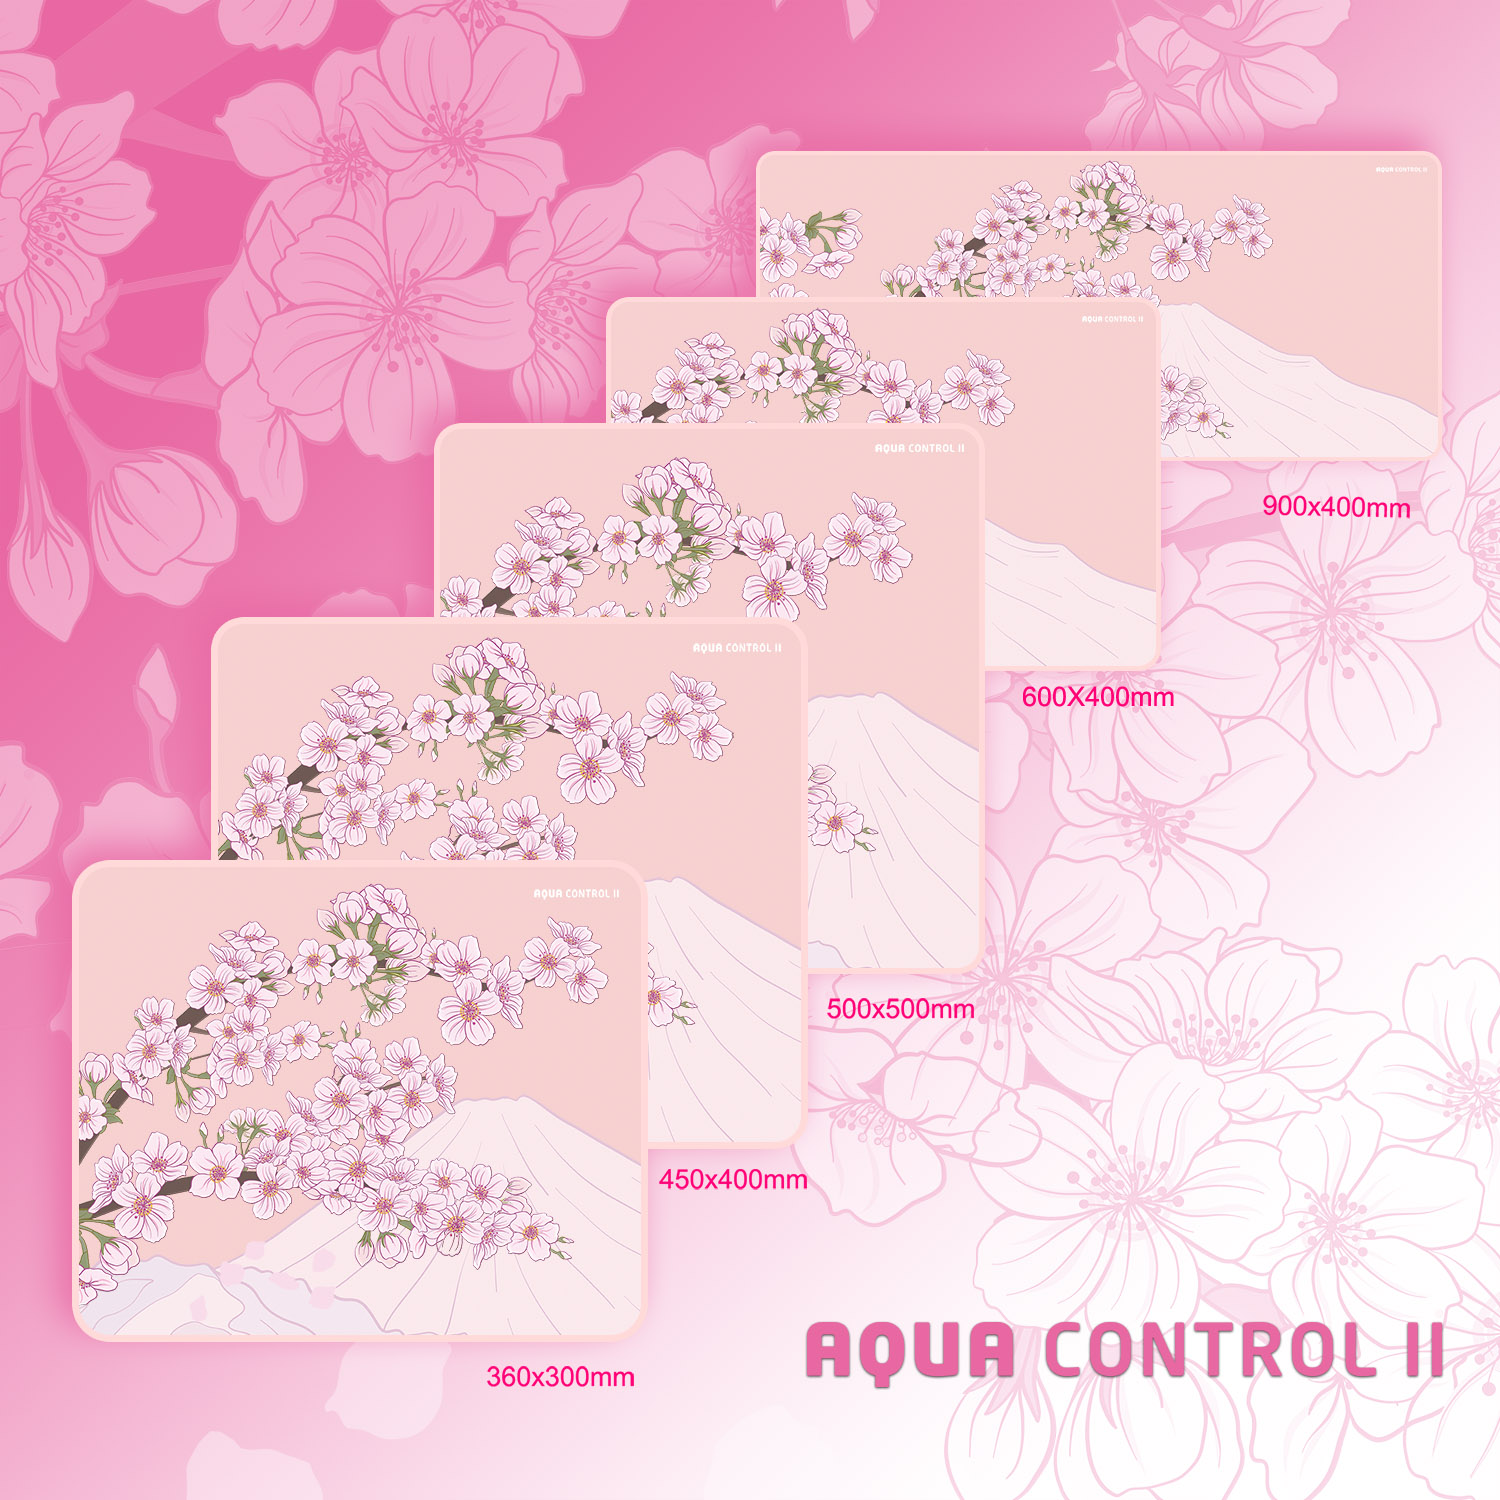 X-raypad Aqua Control II Sakura Gaming Mouse Pads XXL size 900x400x4mm